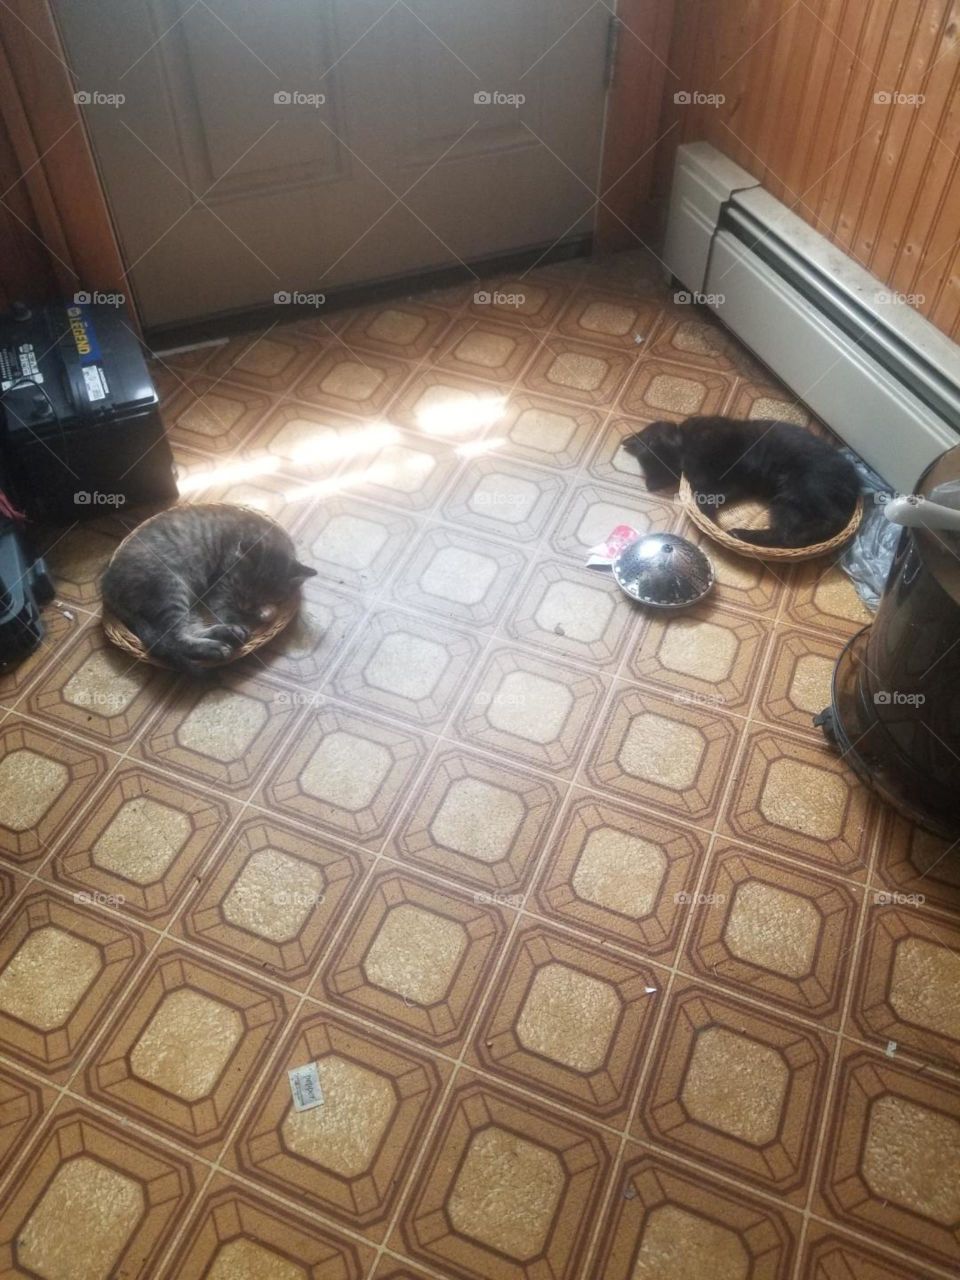 My 2 kittens  Salem. and shiela sleeping on wicker paper plate holders